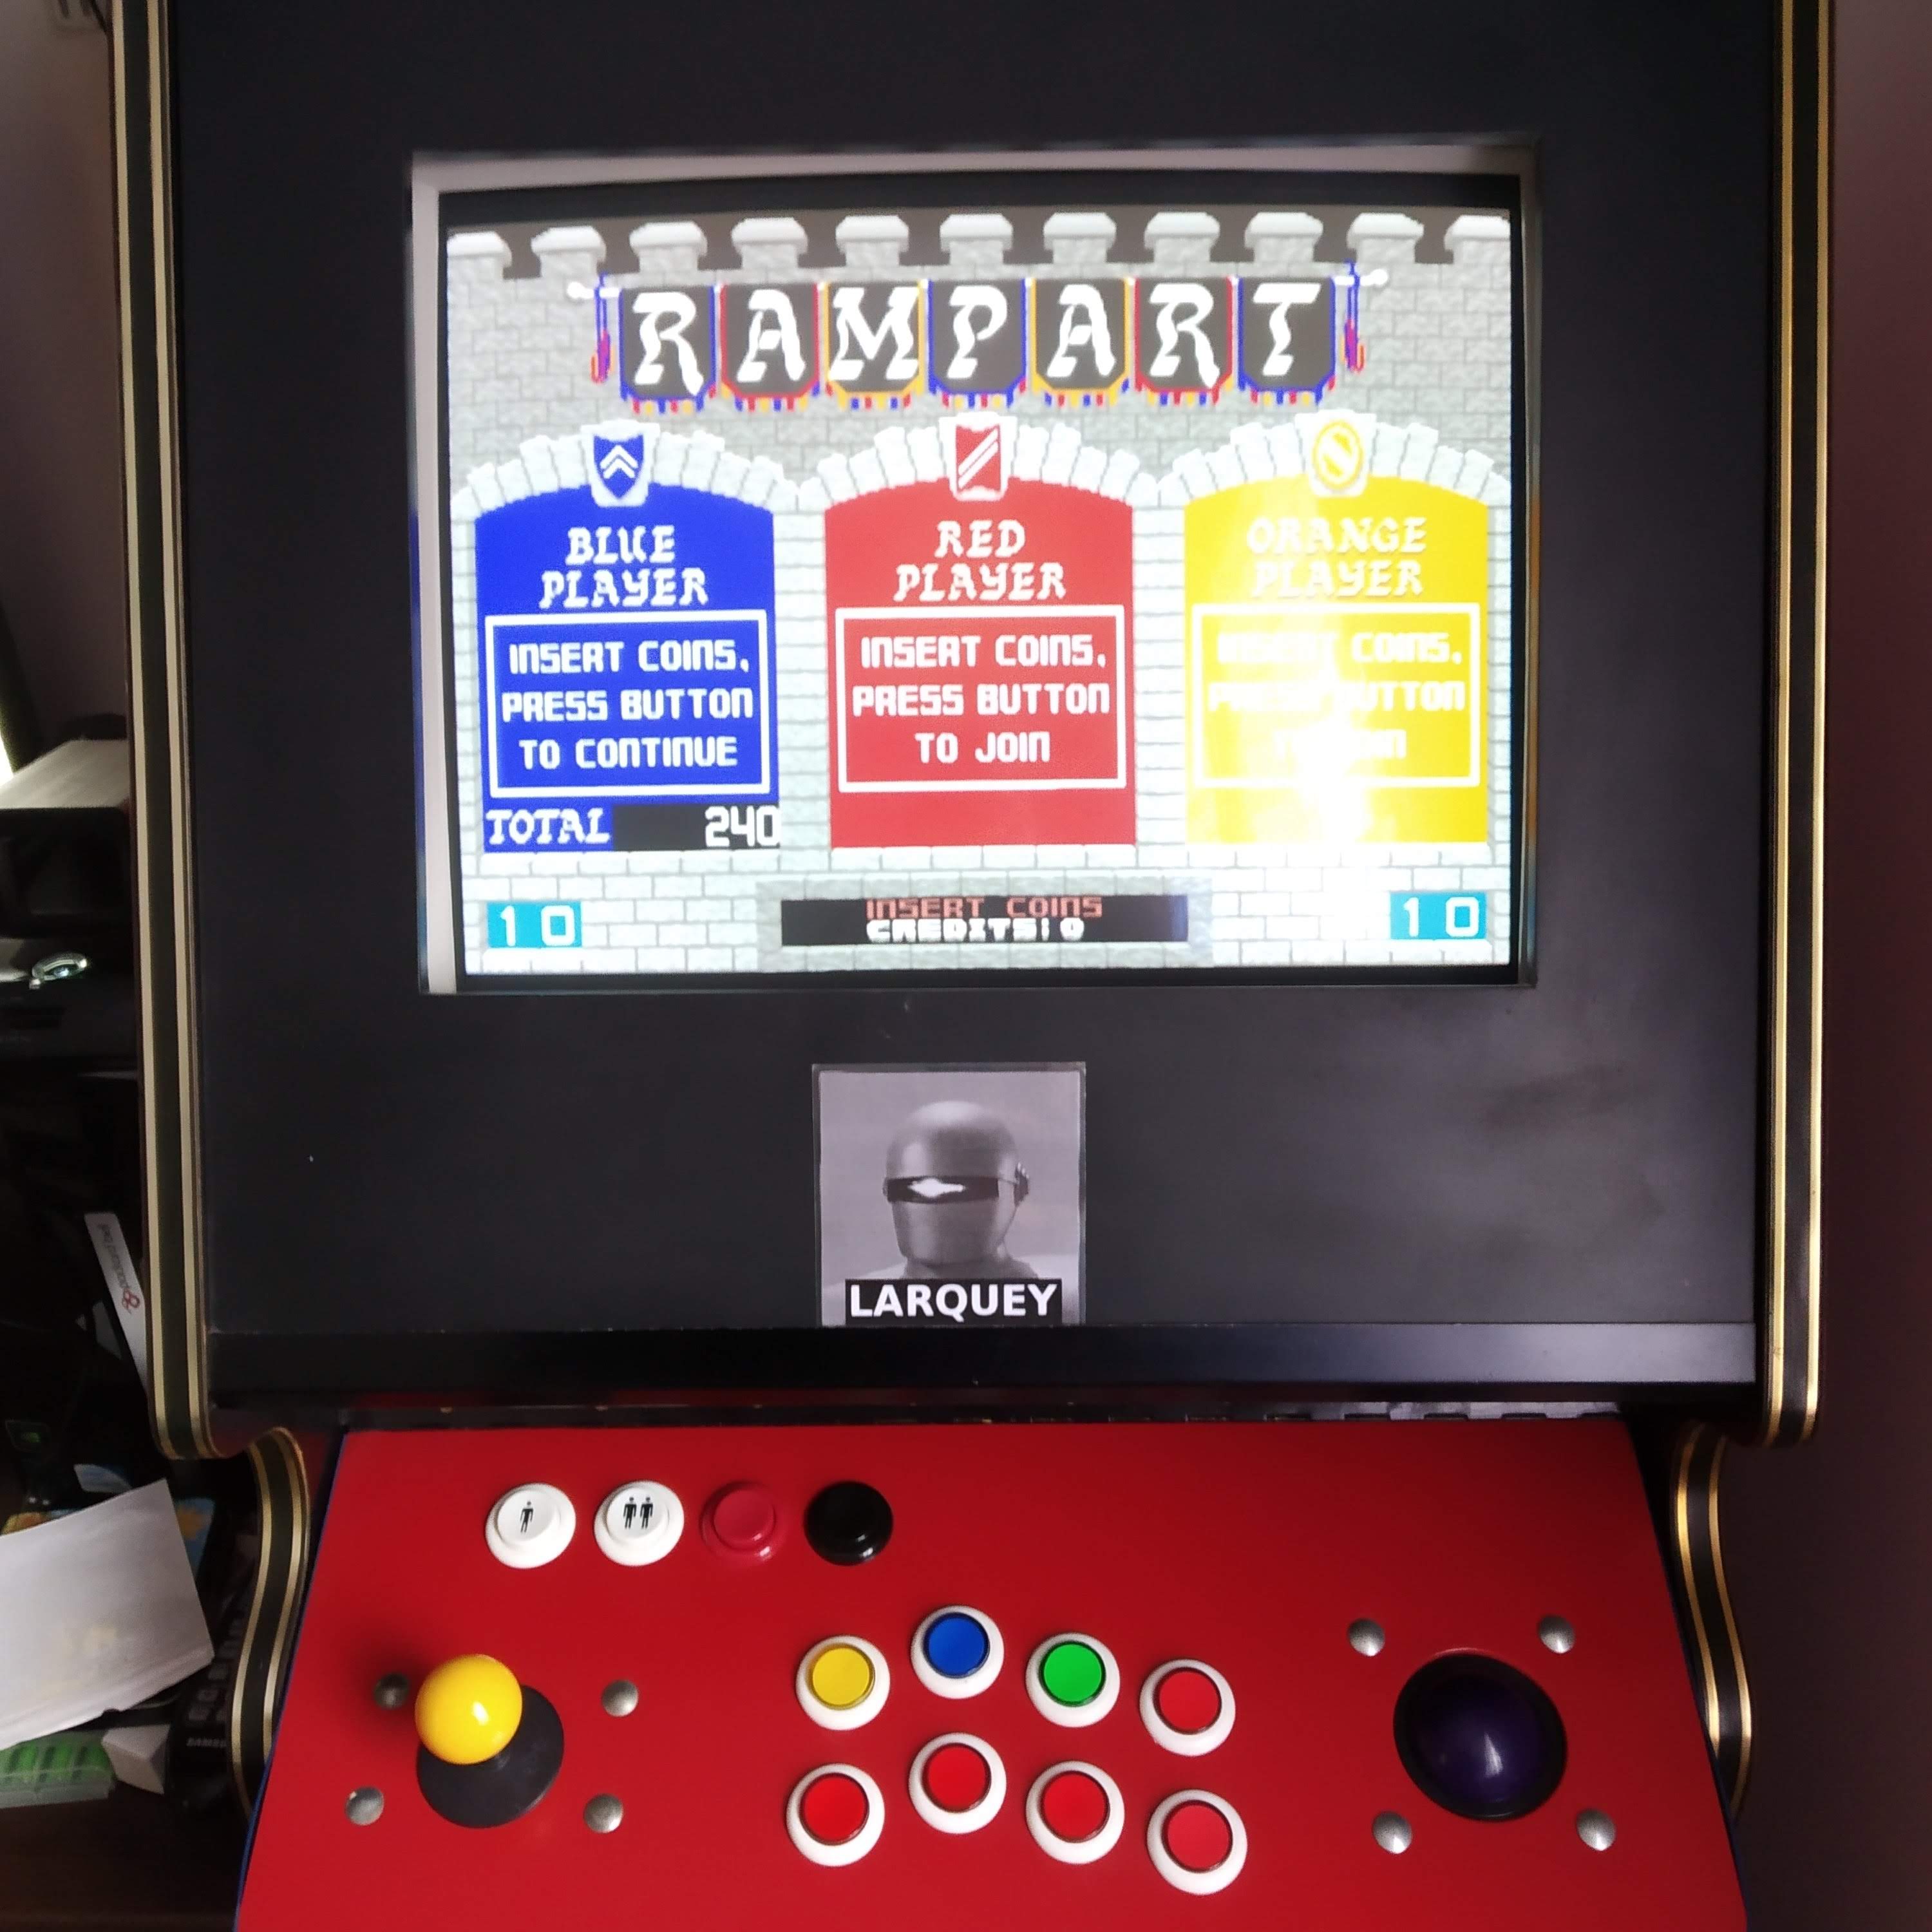 Larquey: Rampart [Trackball] [rampart] (Arcade Emulated / M.A.M.E.) 240 points on 2020-05-02 02:40:34